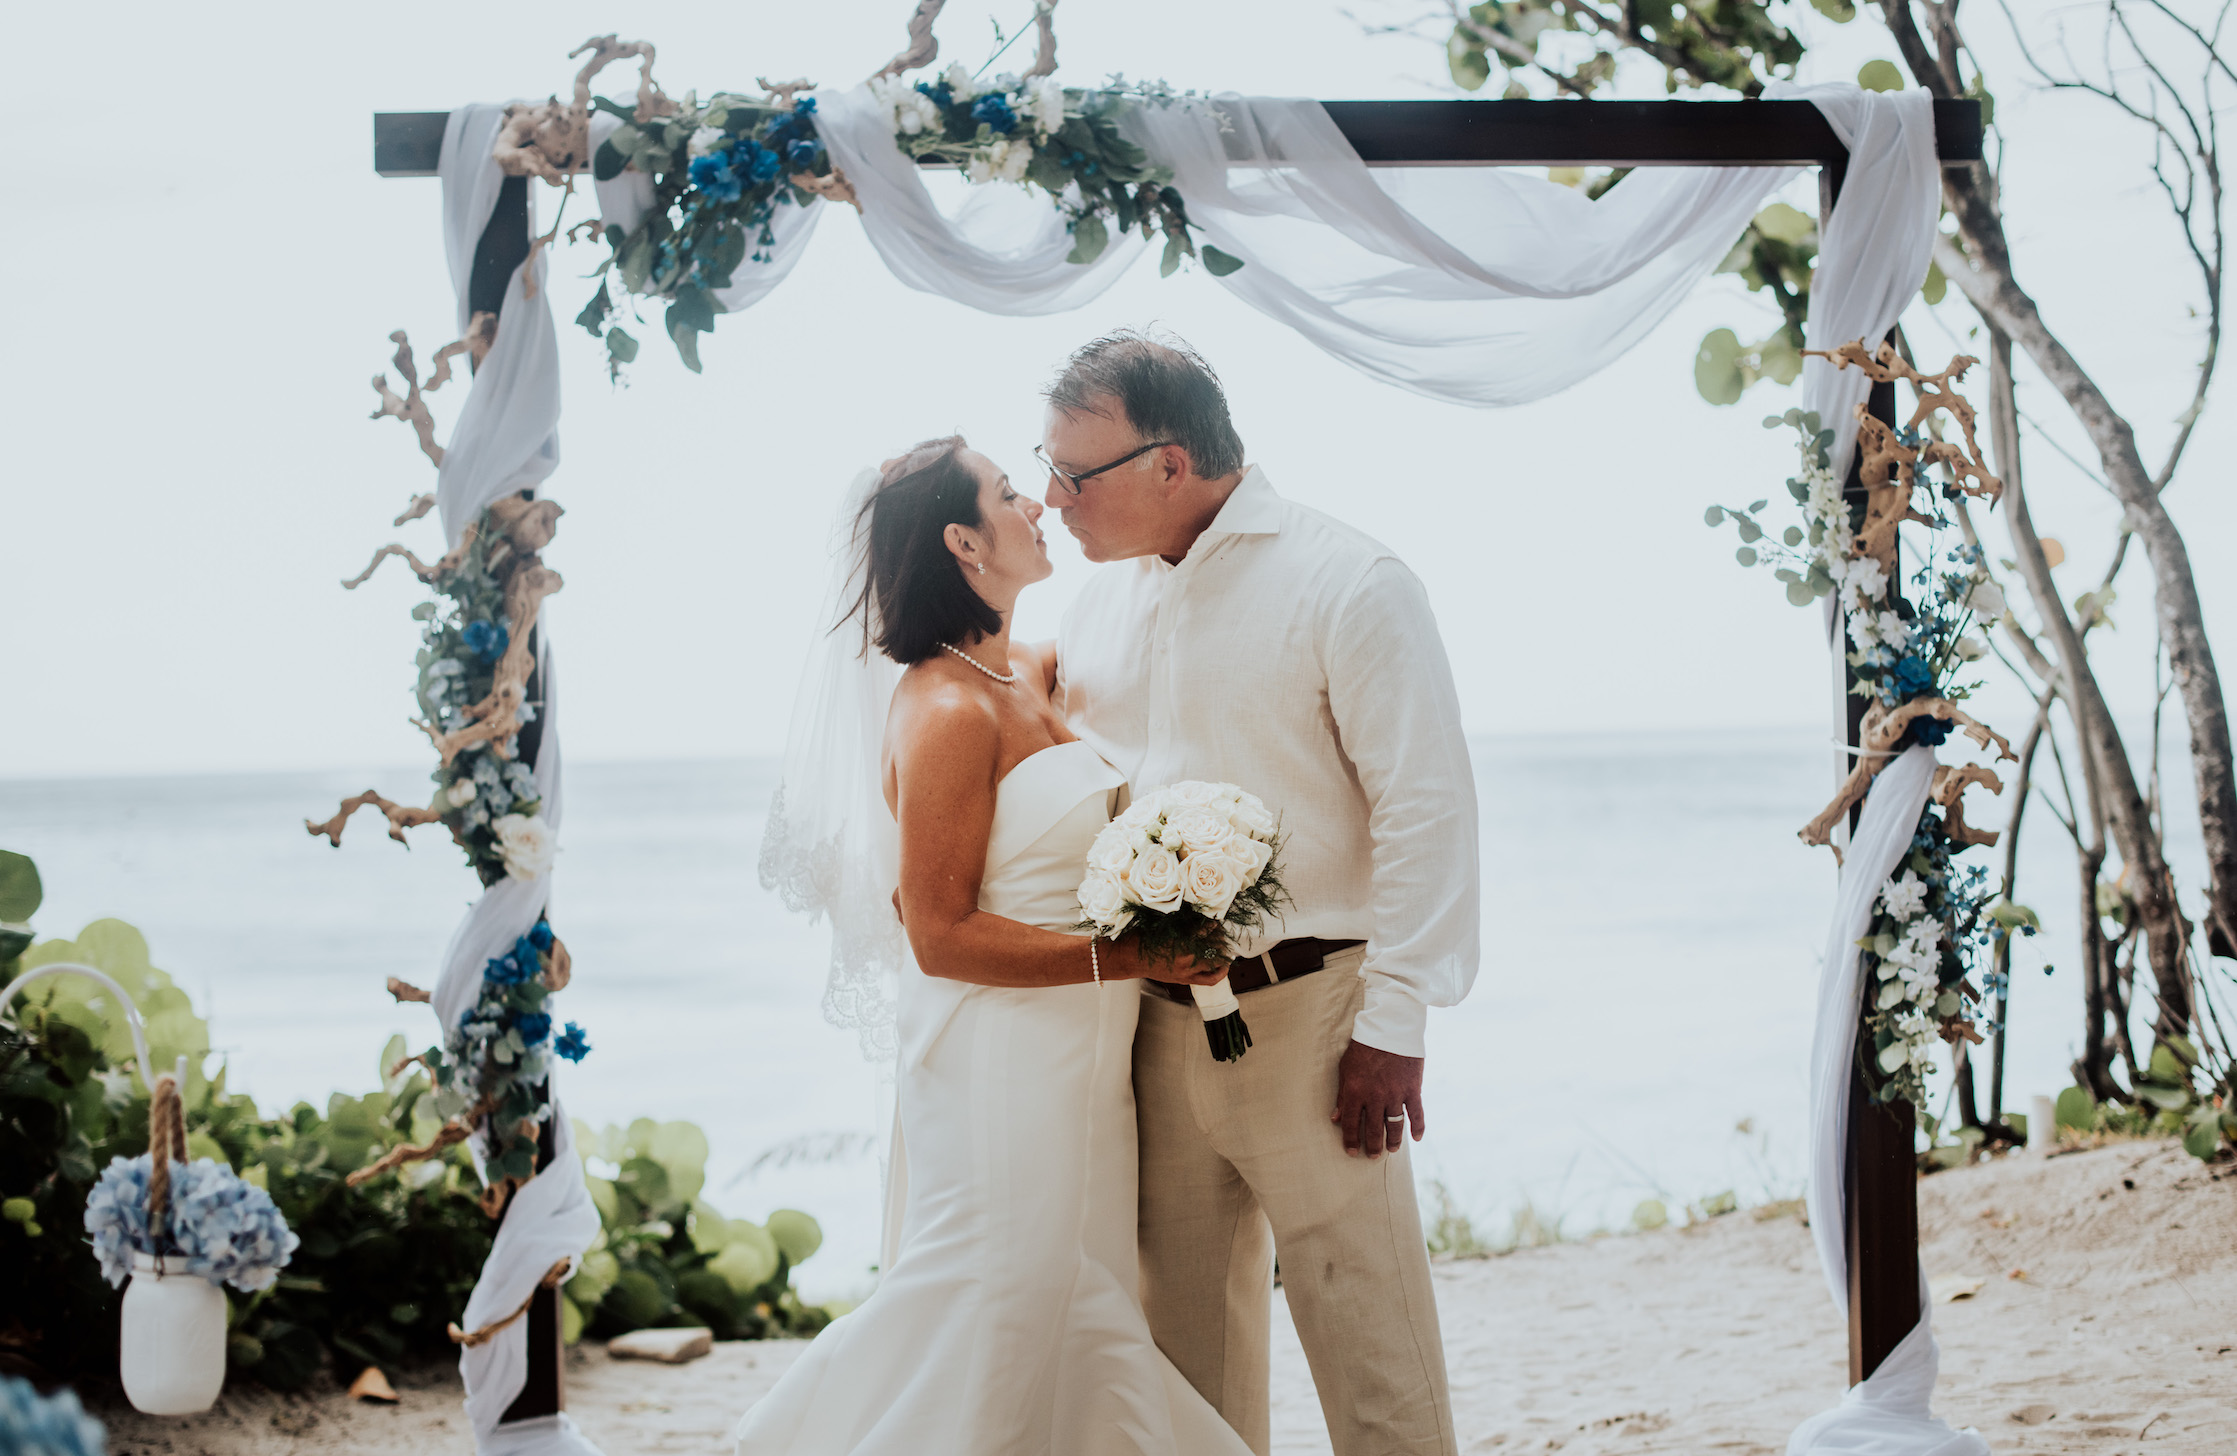 Private elegant beach wedding ceremony